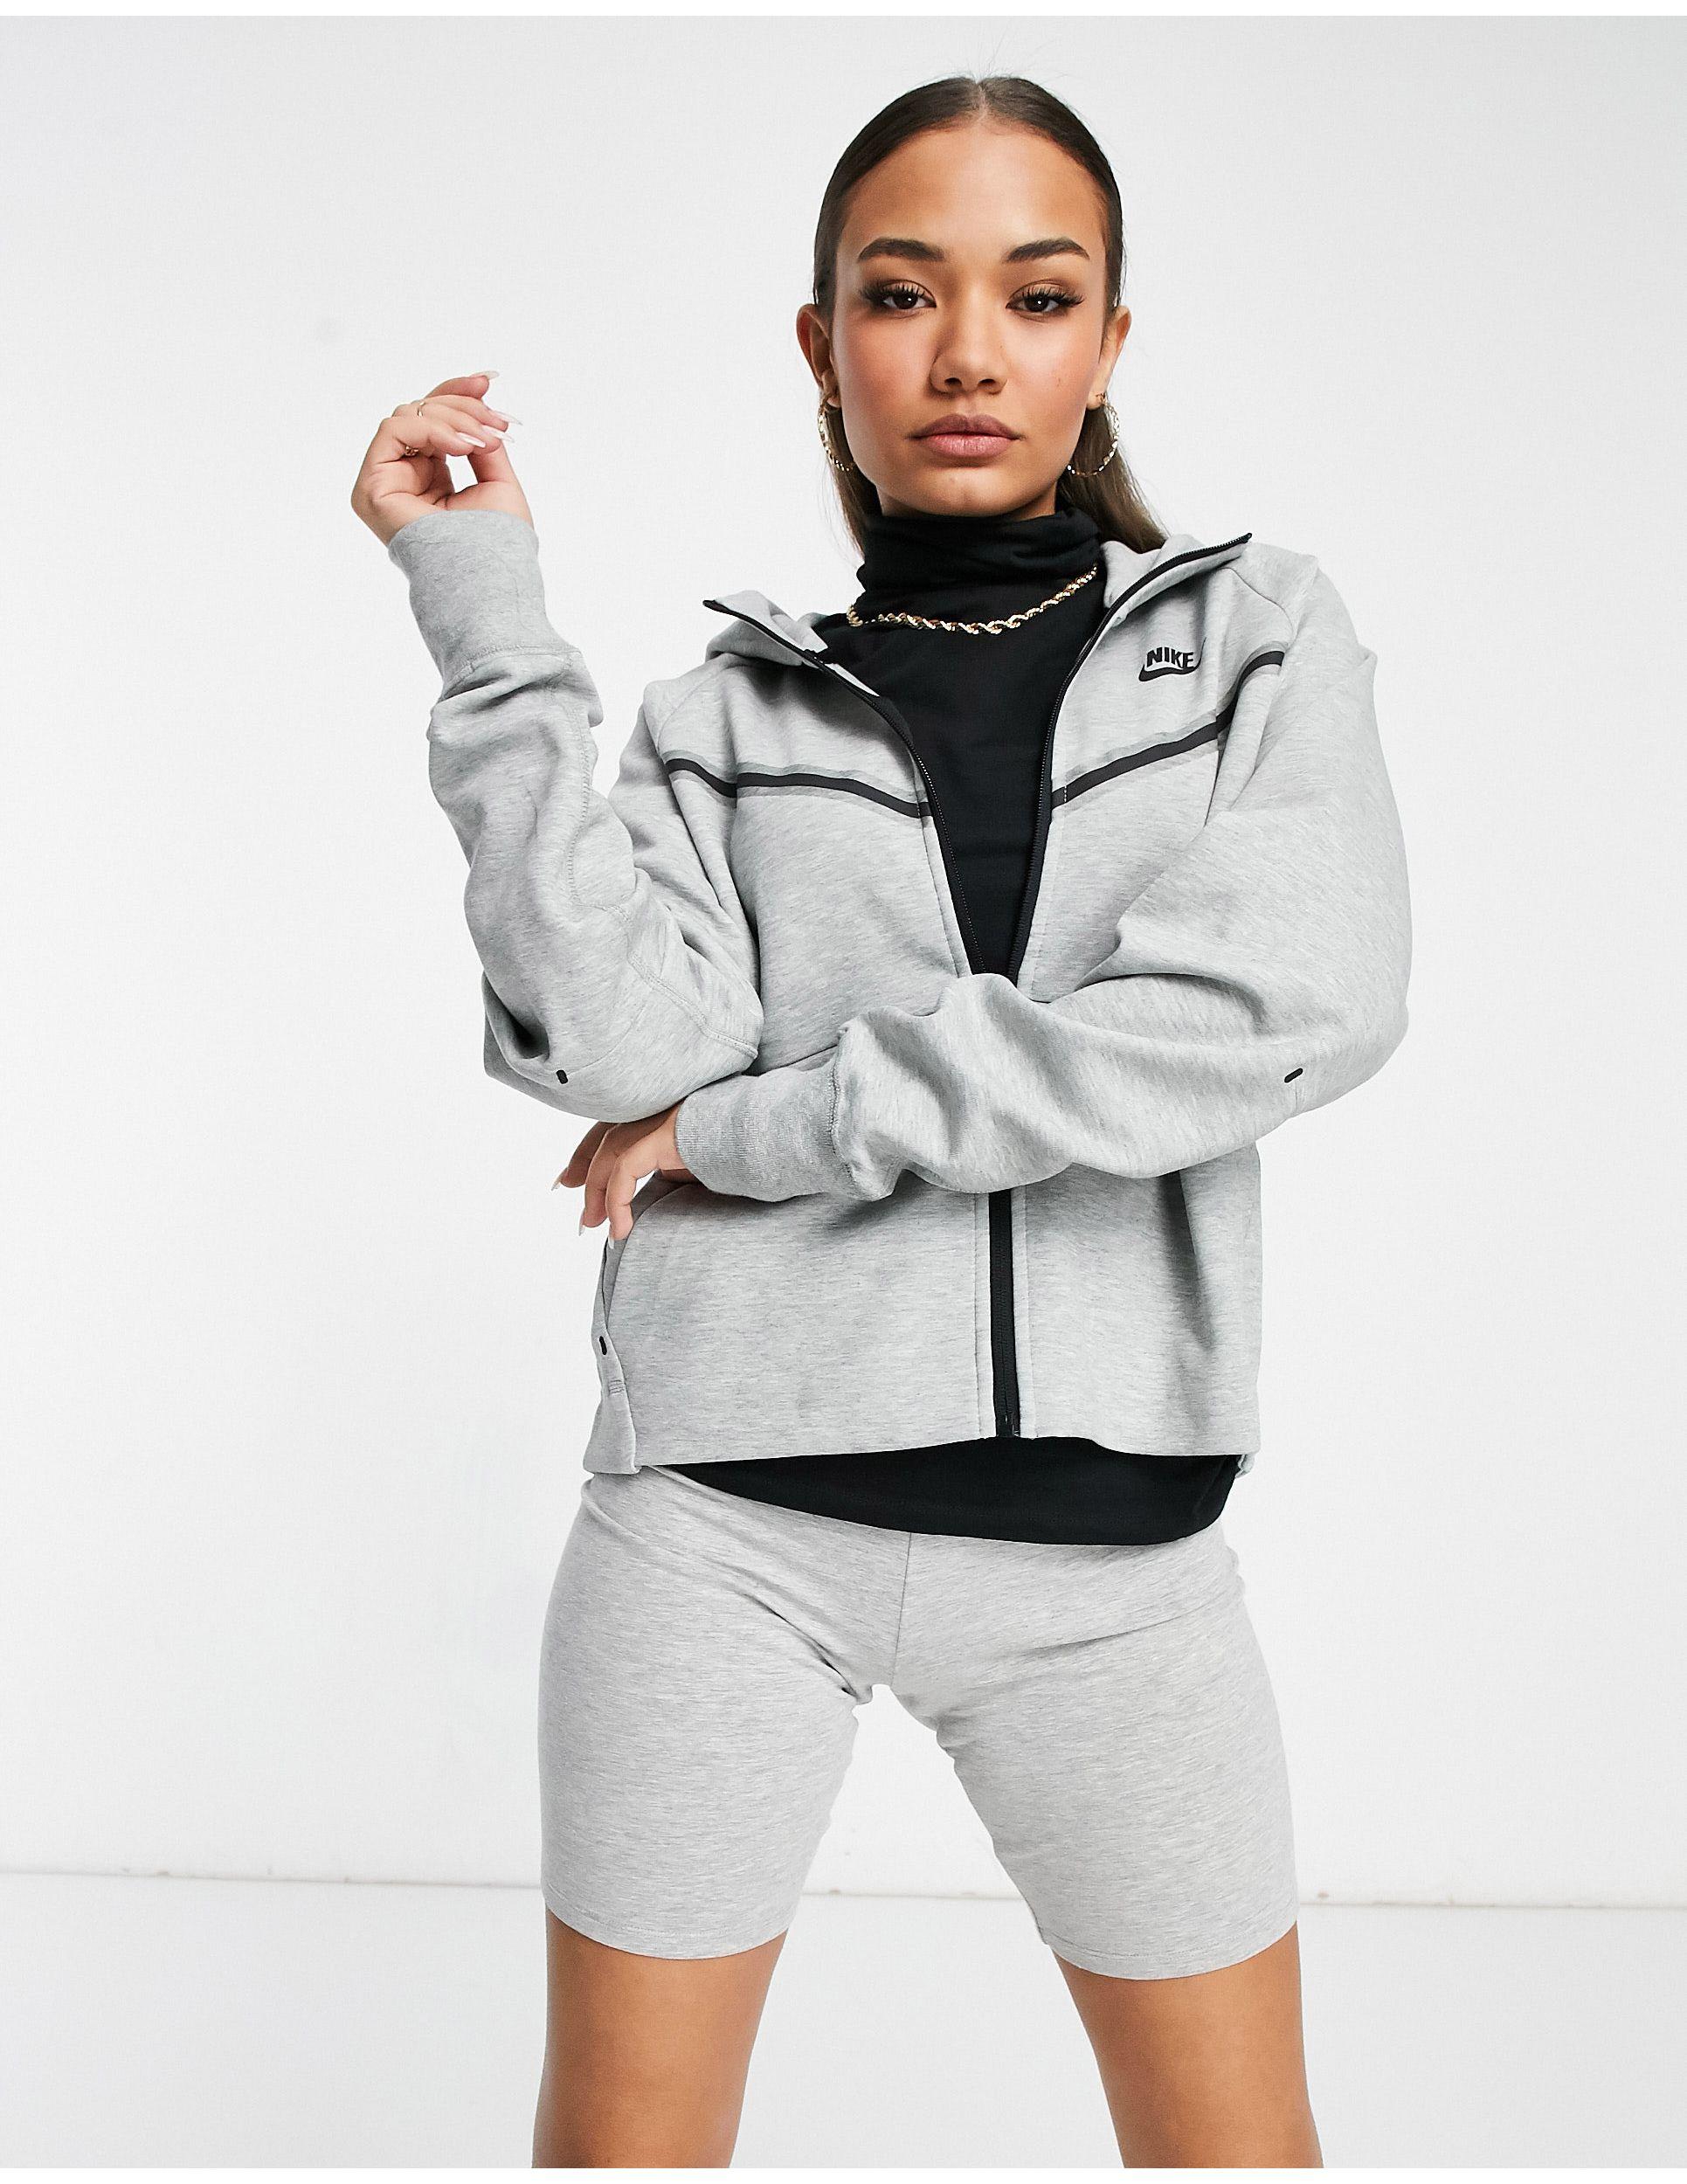 Nike Tech Fleece Hoodie in Dark Grey Heather/Black (Gray) - Save 44% | Lyst